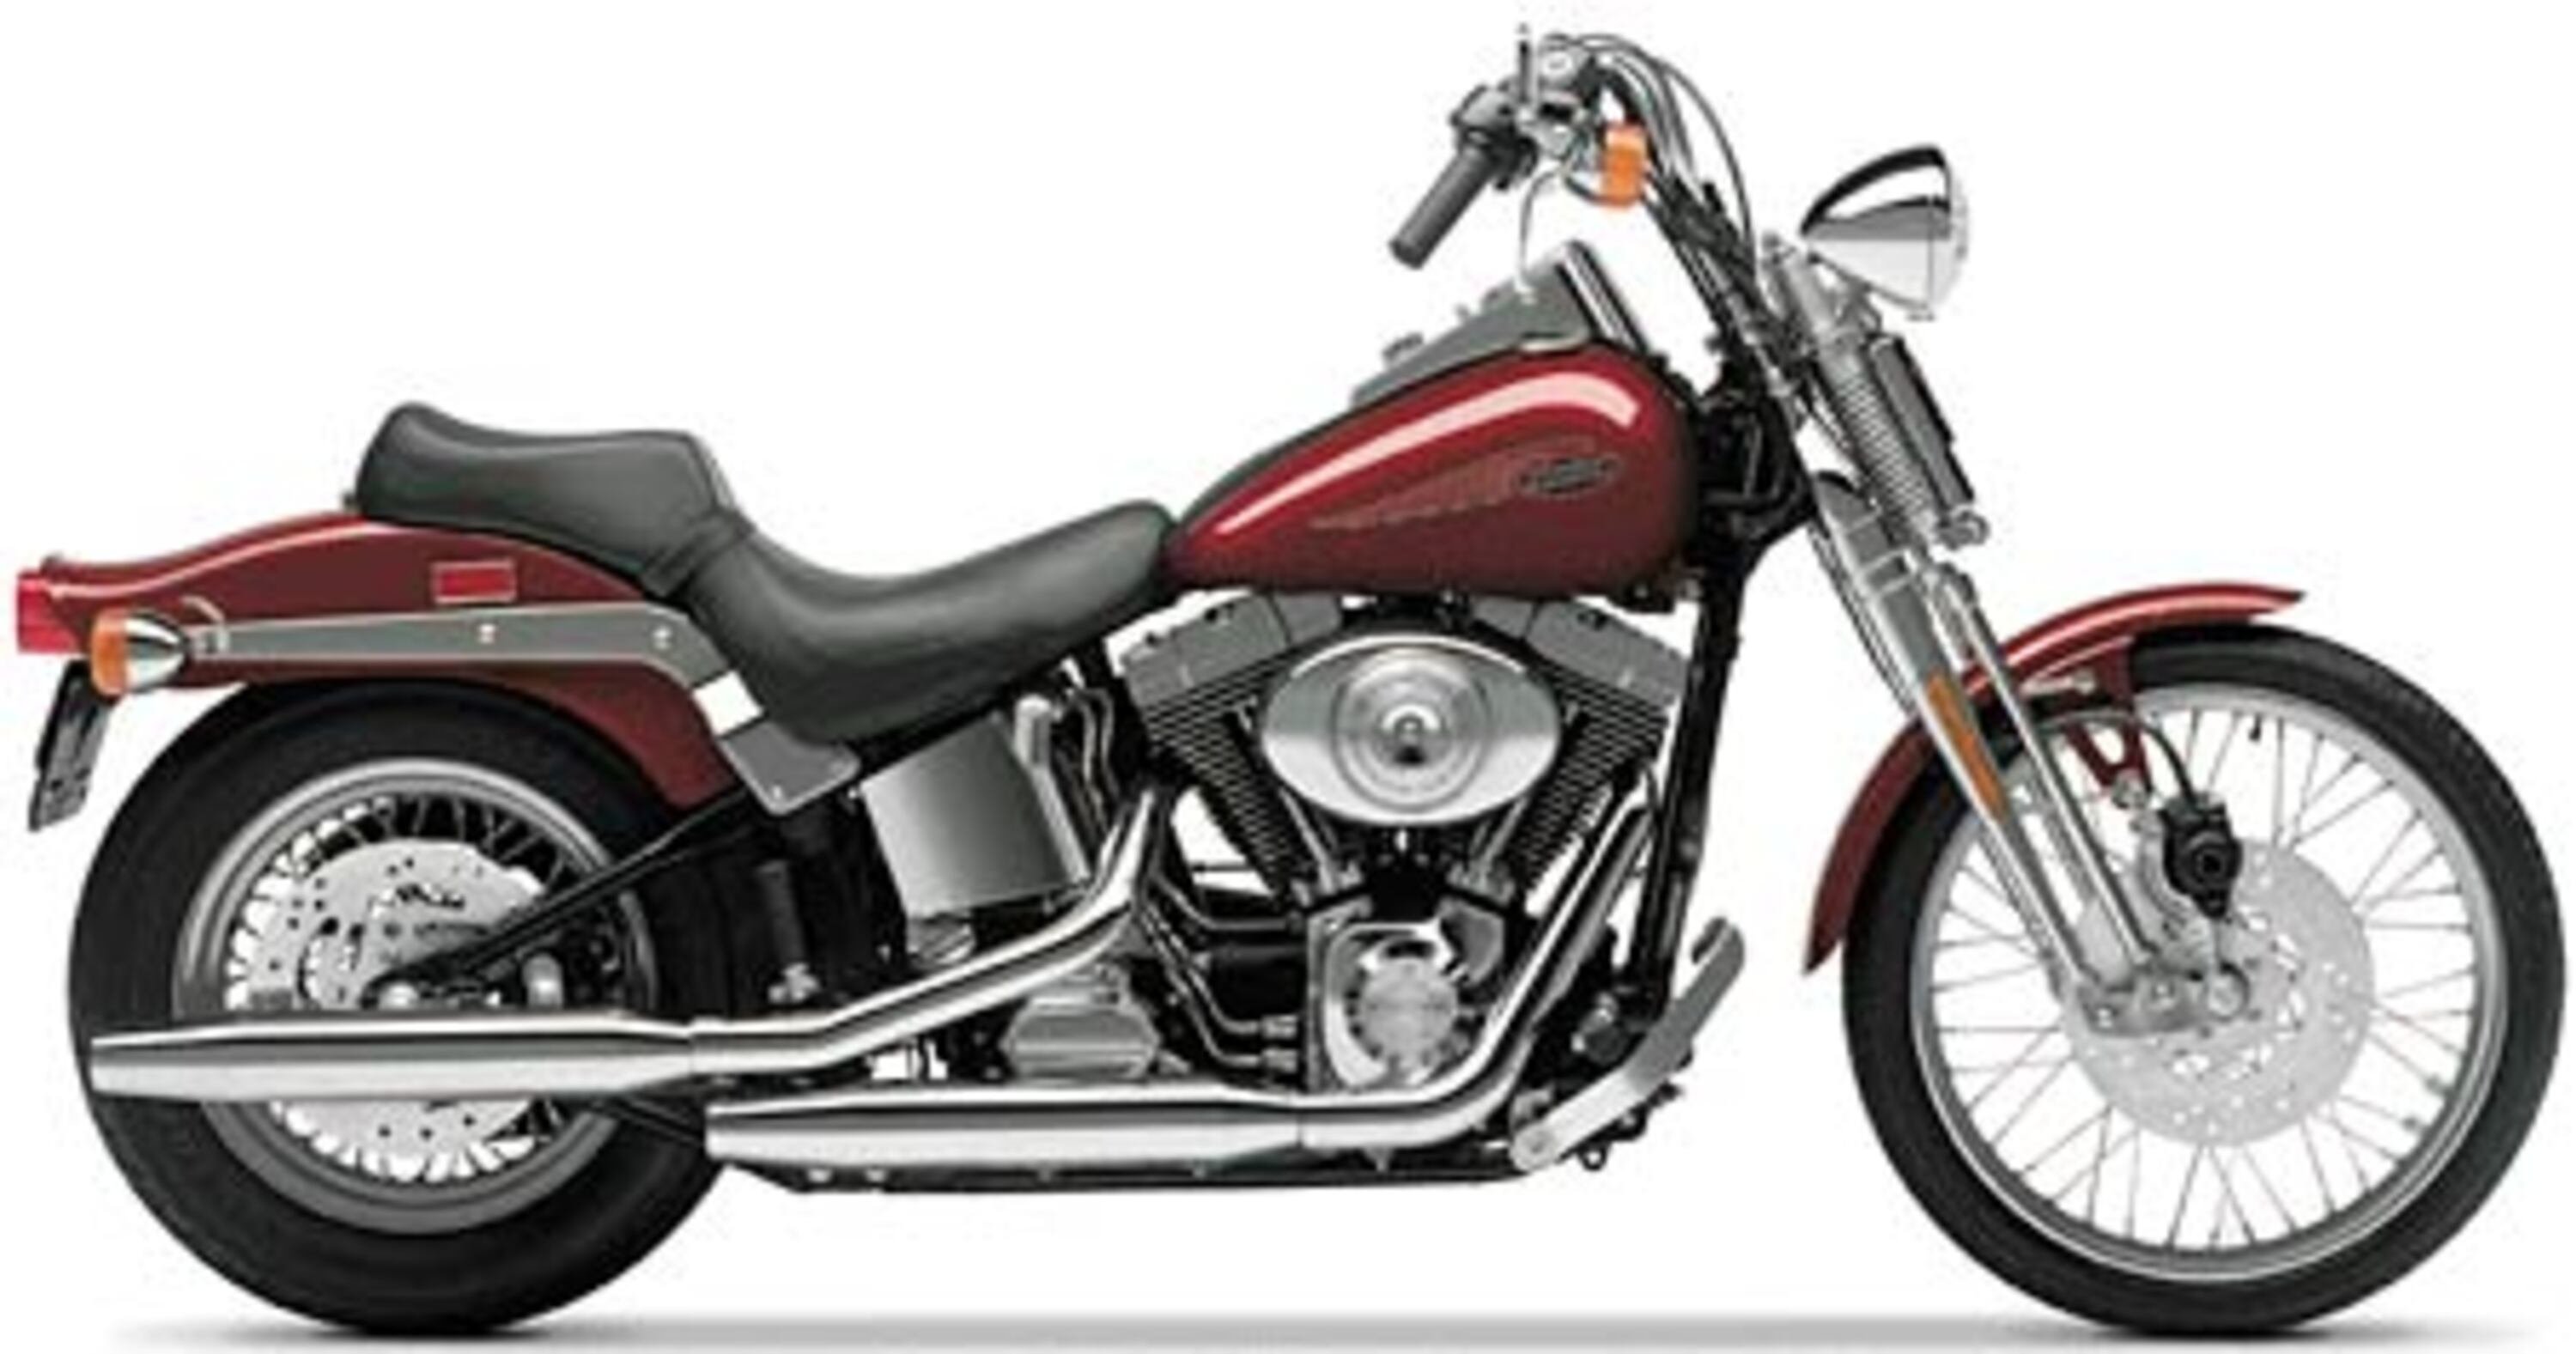 Harley-Davidson Softail 1340 Springer (1990 - 98) - FXSTS